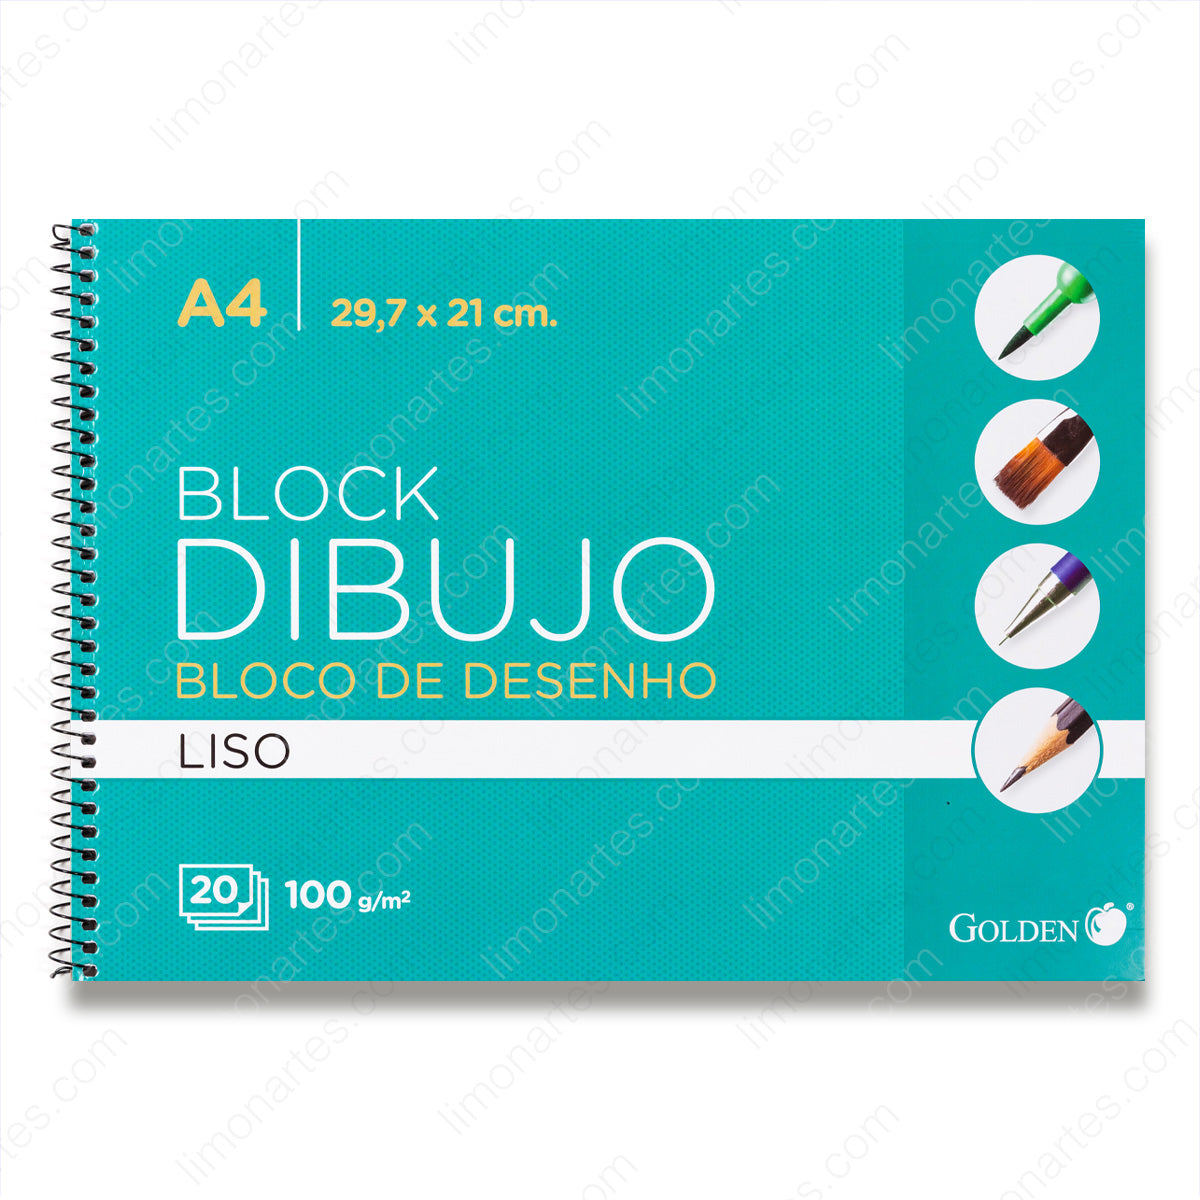 Cuaderno de dibujo/Block dibujo/Liso/A4,29,7x21cm/20 hojas,100 gr/Gold –  LIMÓN ARTES